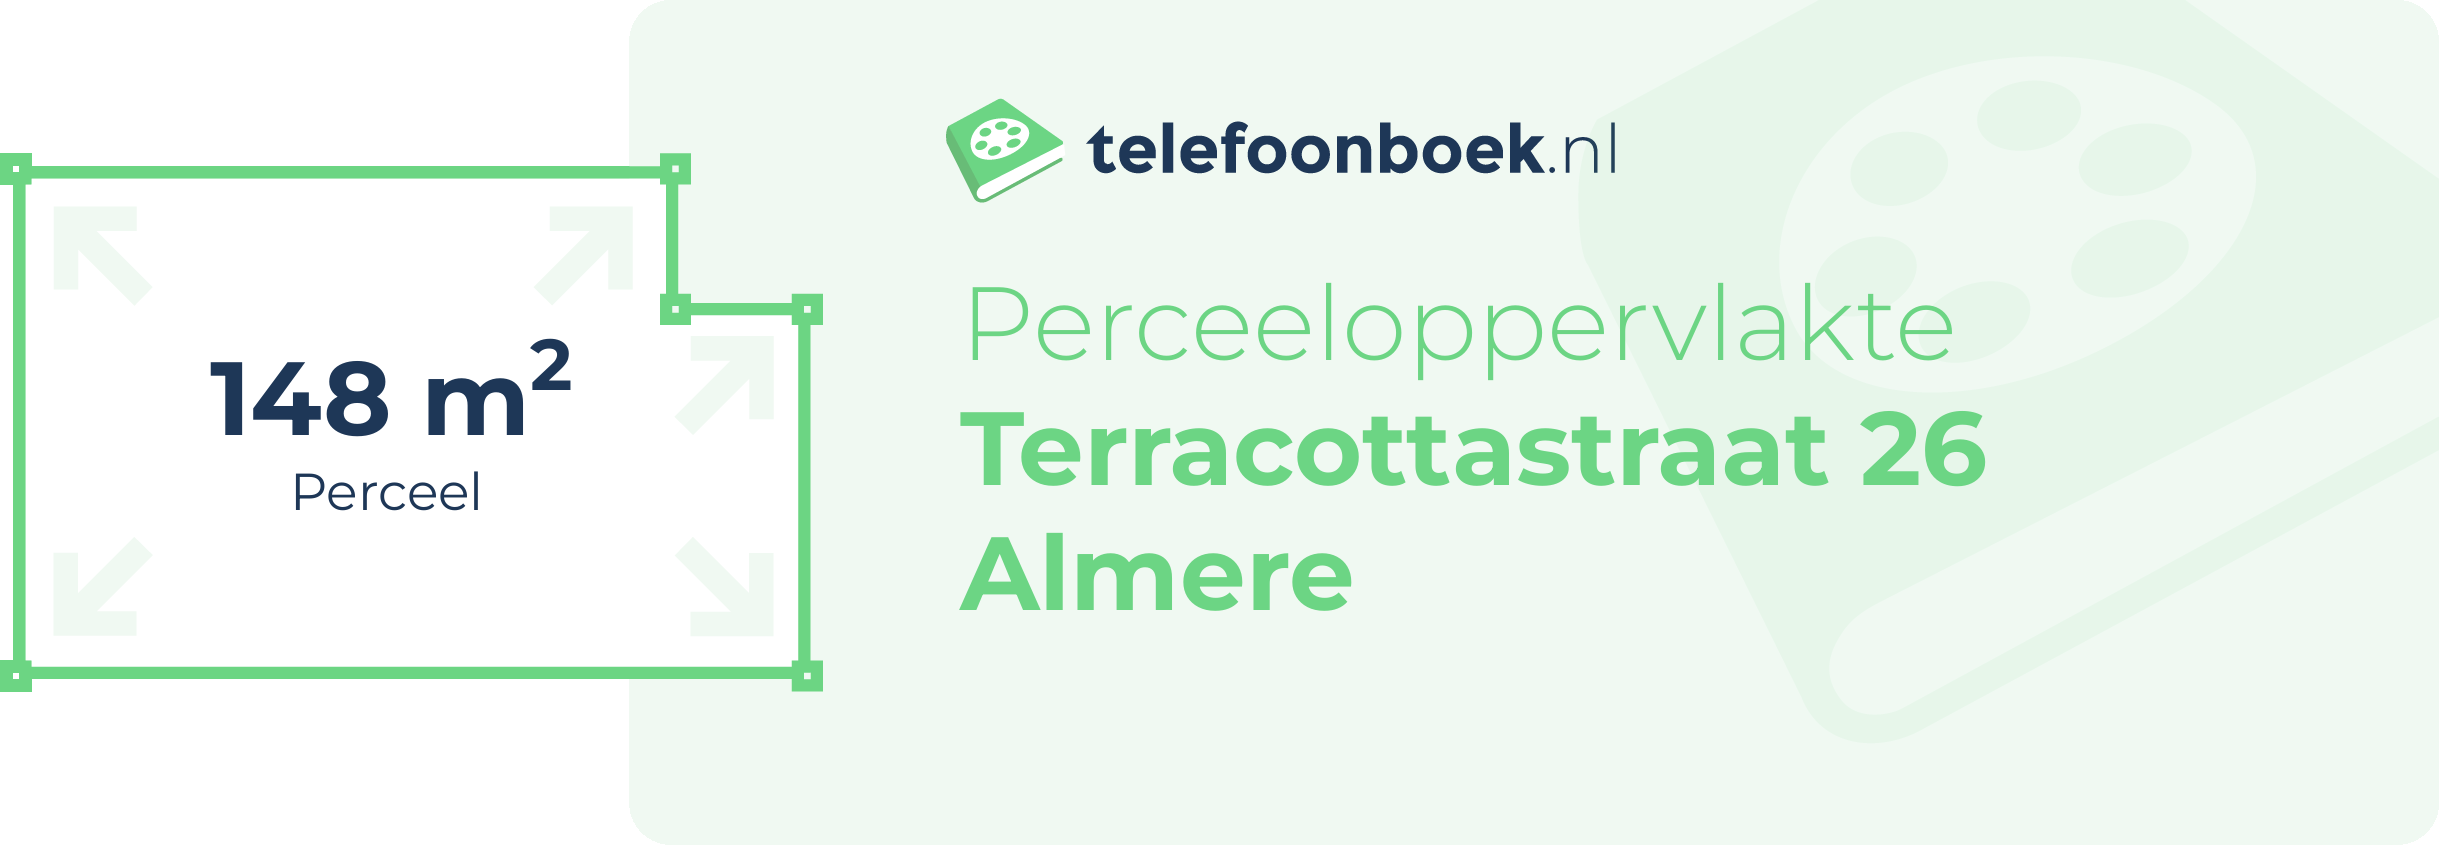 Perceeloppervlakte Terracottastraat 26 Almere